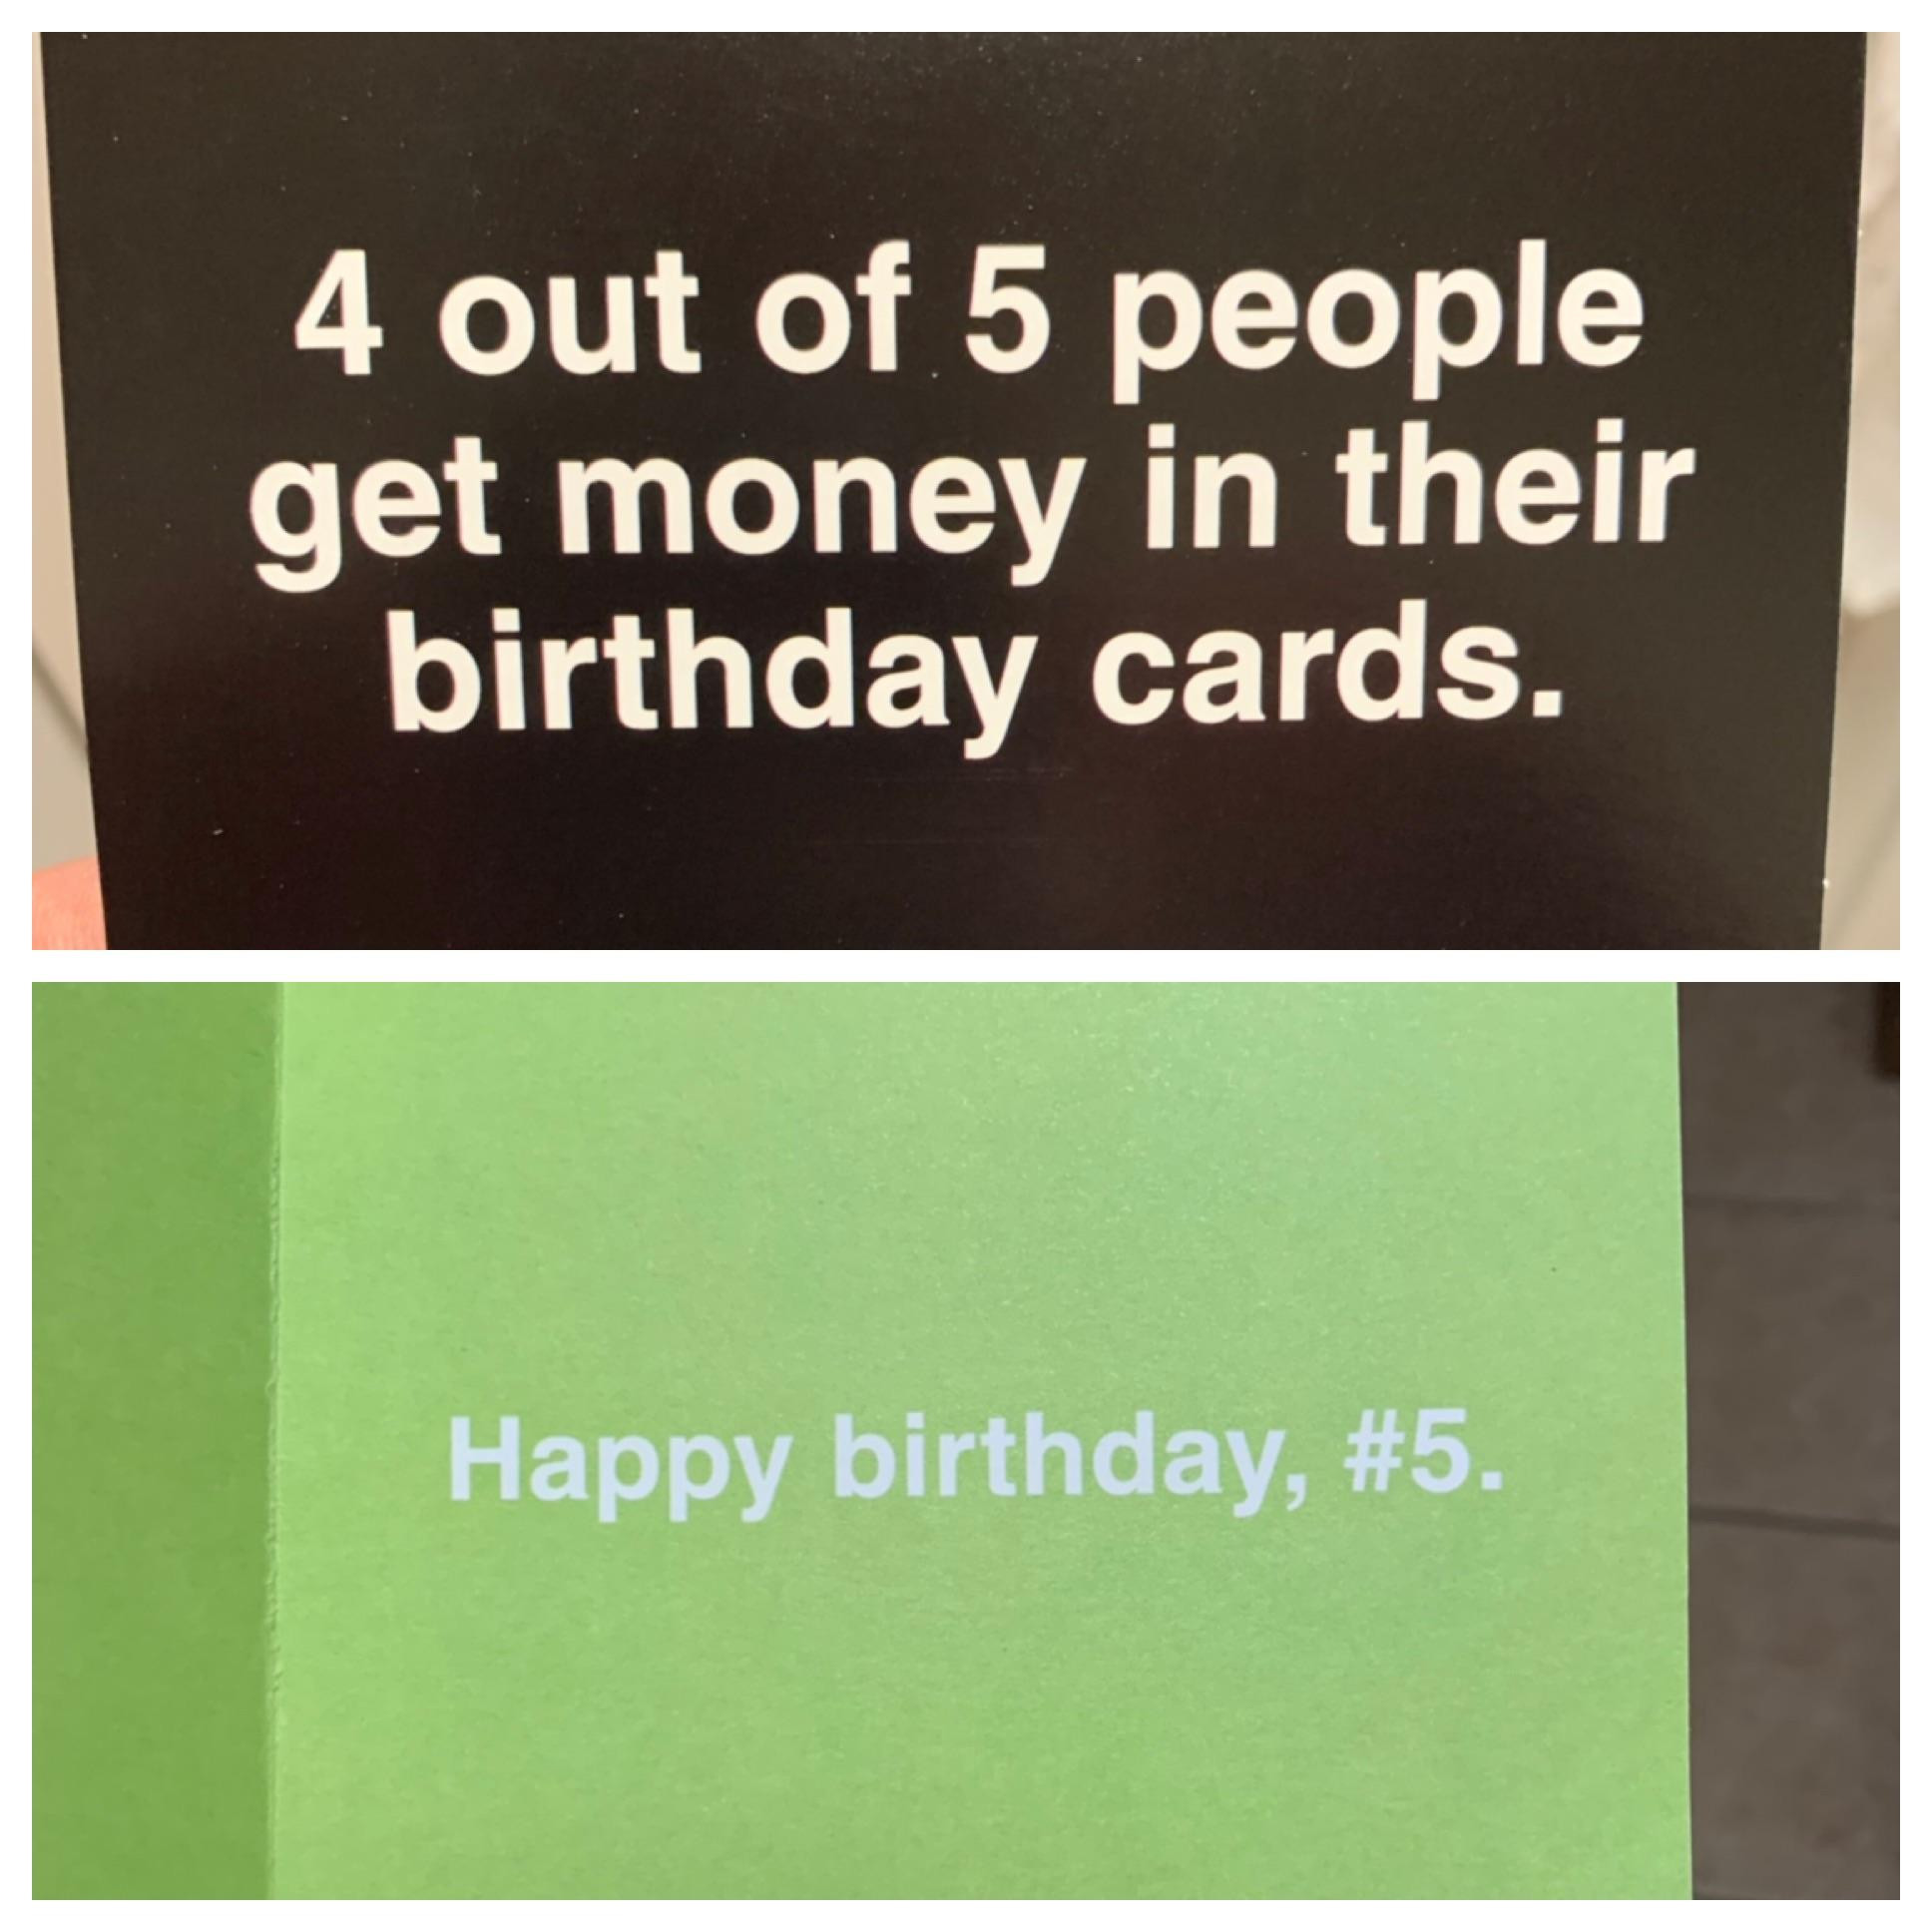 Funny Boss Birthday Cards
 Got my boss a birthday card funny